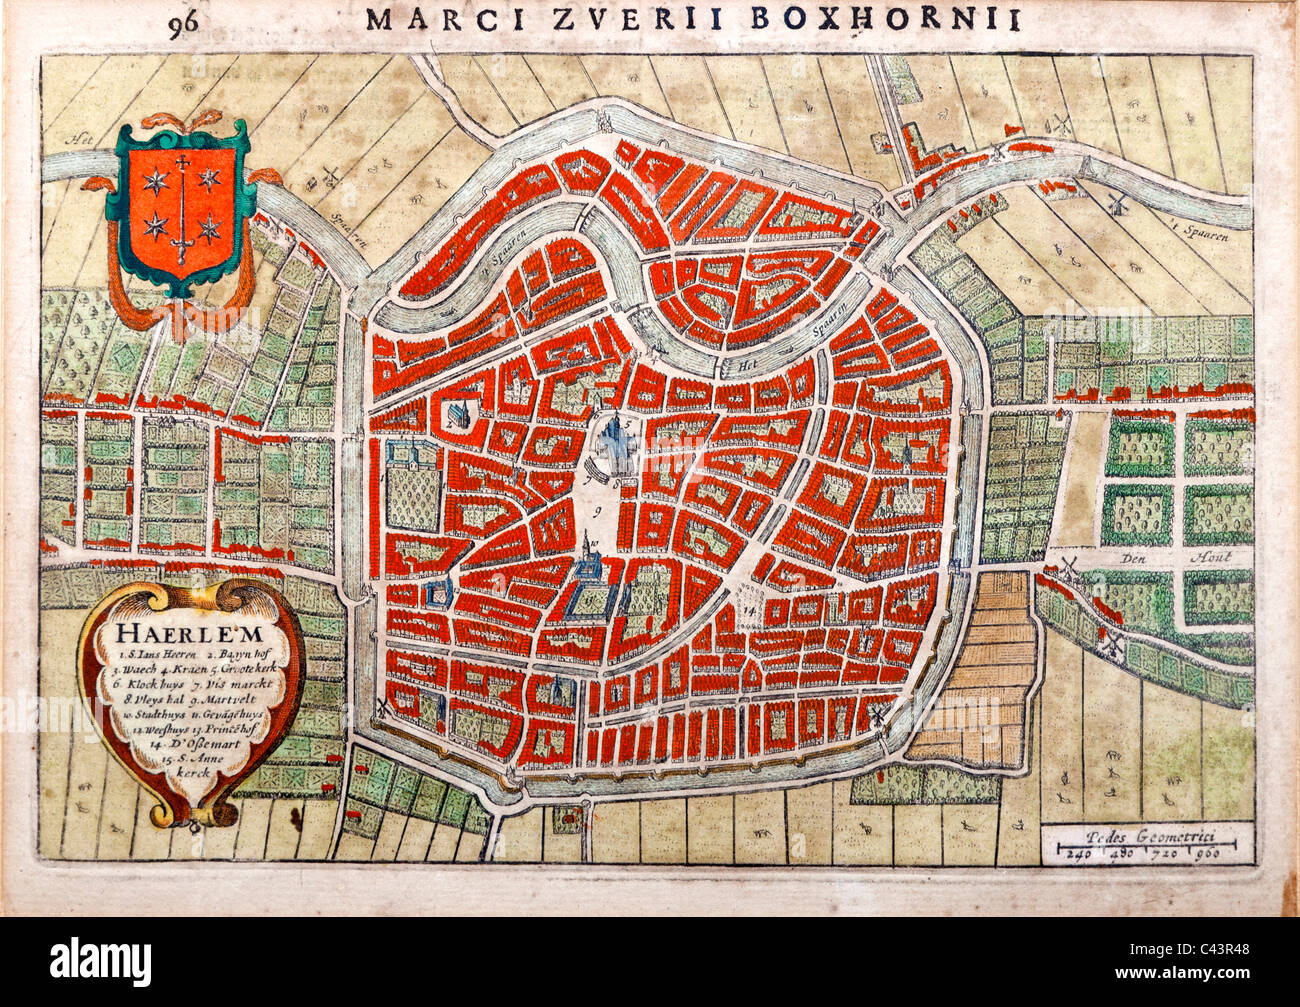 HAARLEM & ZANDVOORT environs/town city stadsplan Netherlands kaart 1905 map 